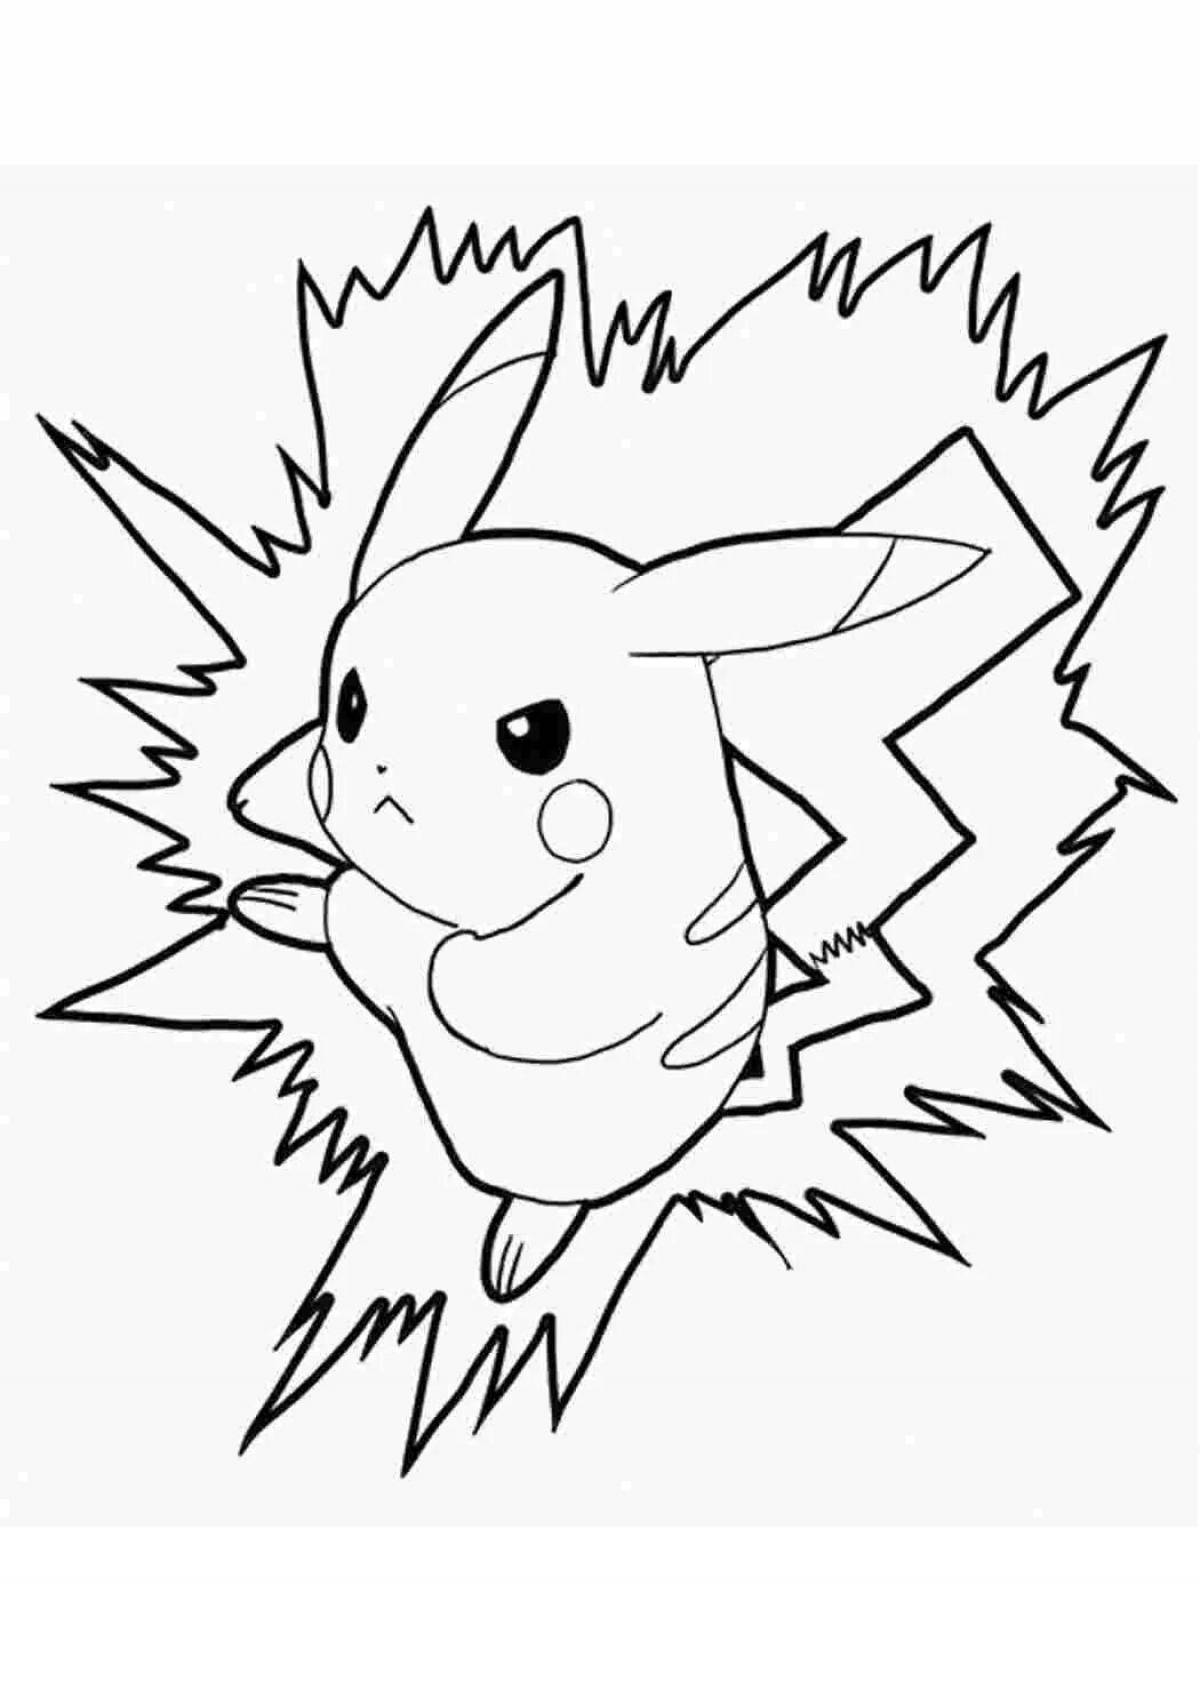 Playful pikachu coloring page